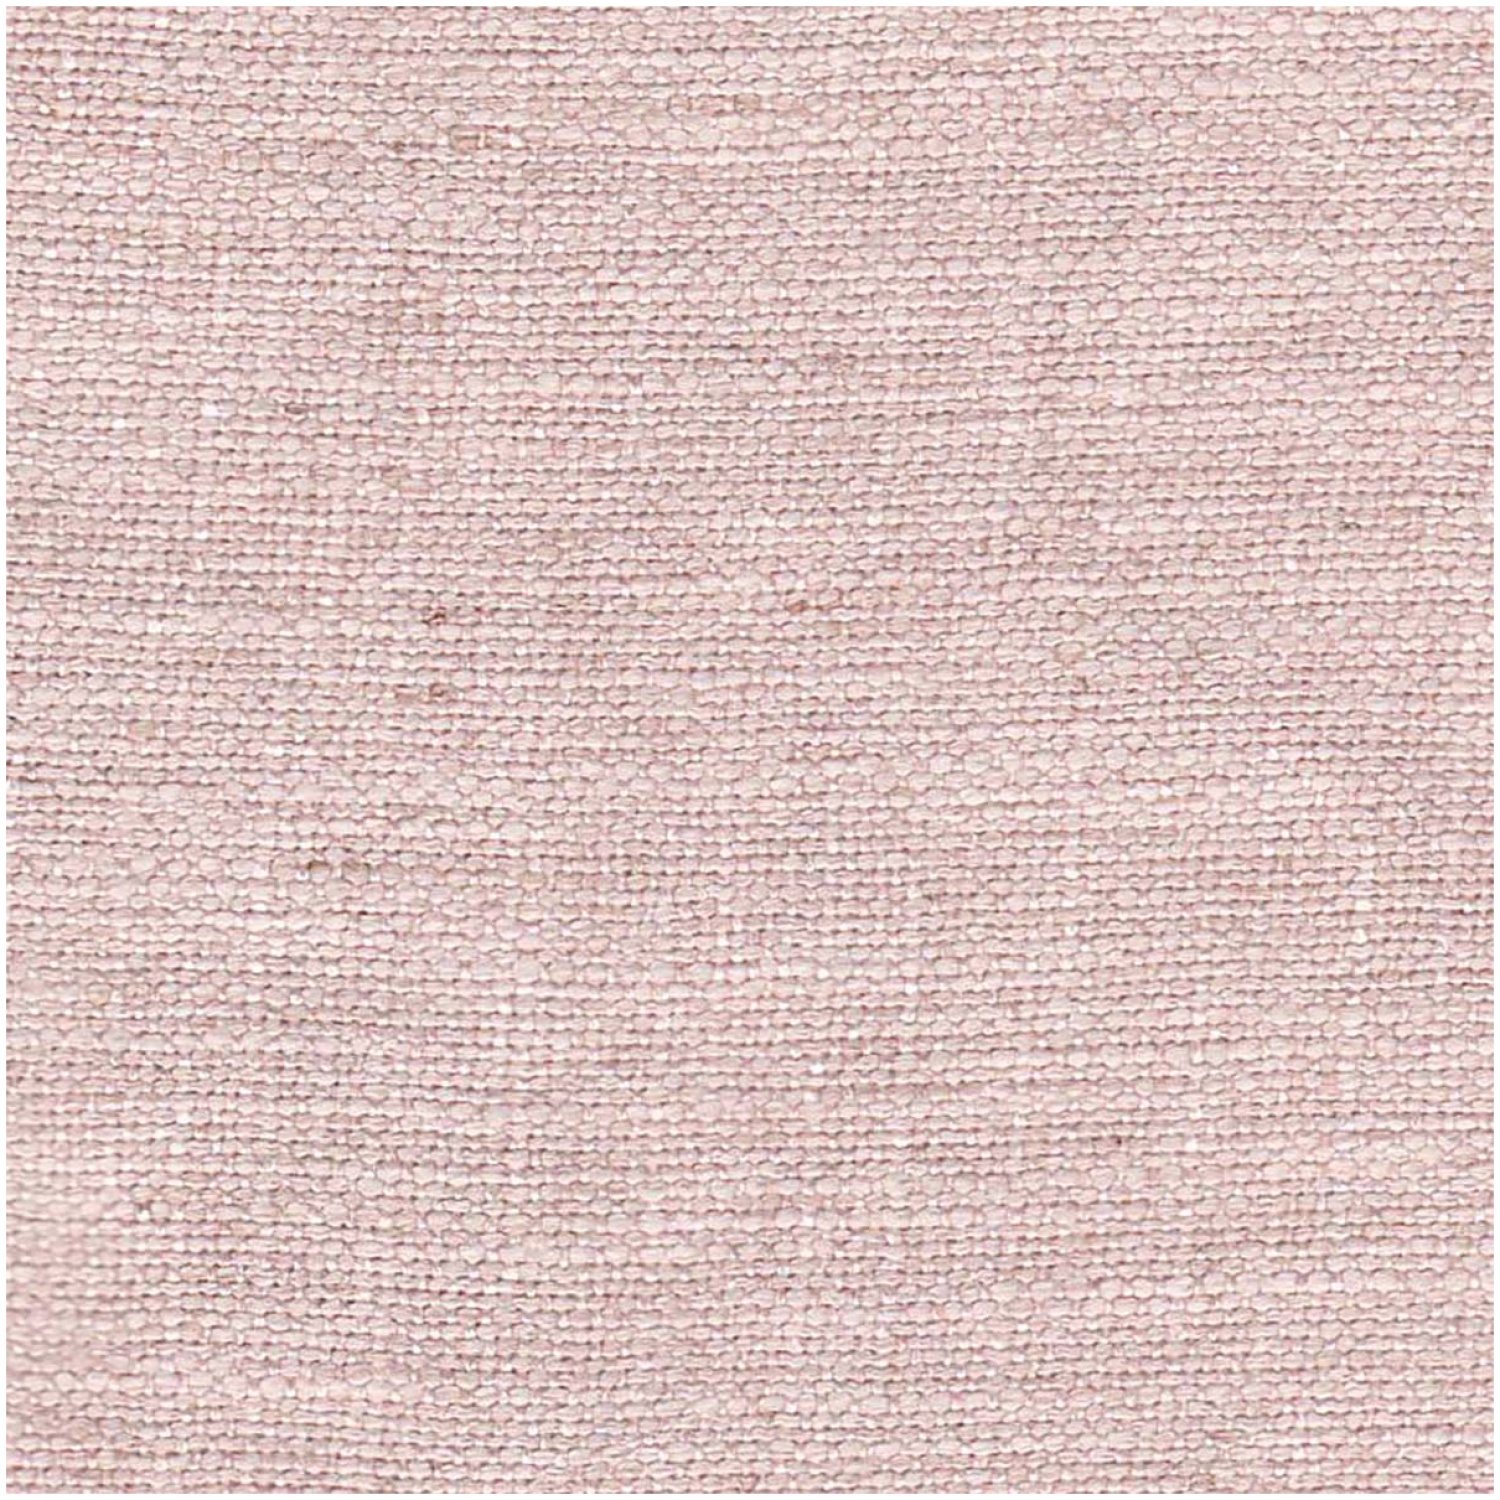 Lisann/Rose - Multi Purpose Fabric Suitable For Drapery